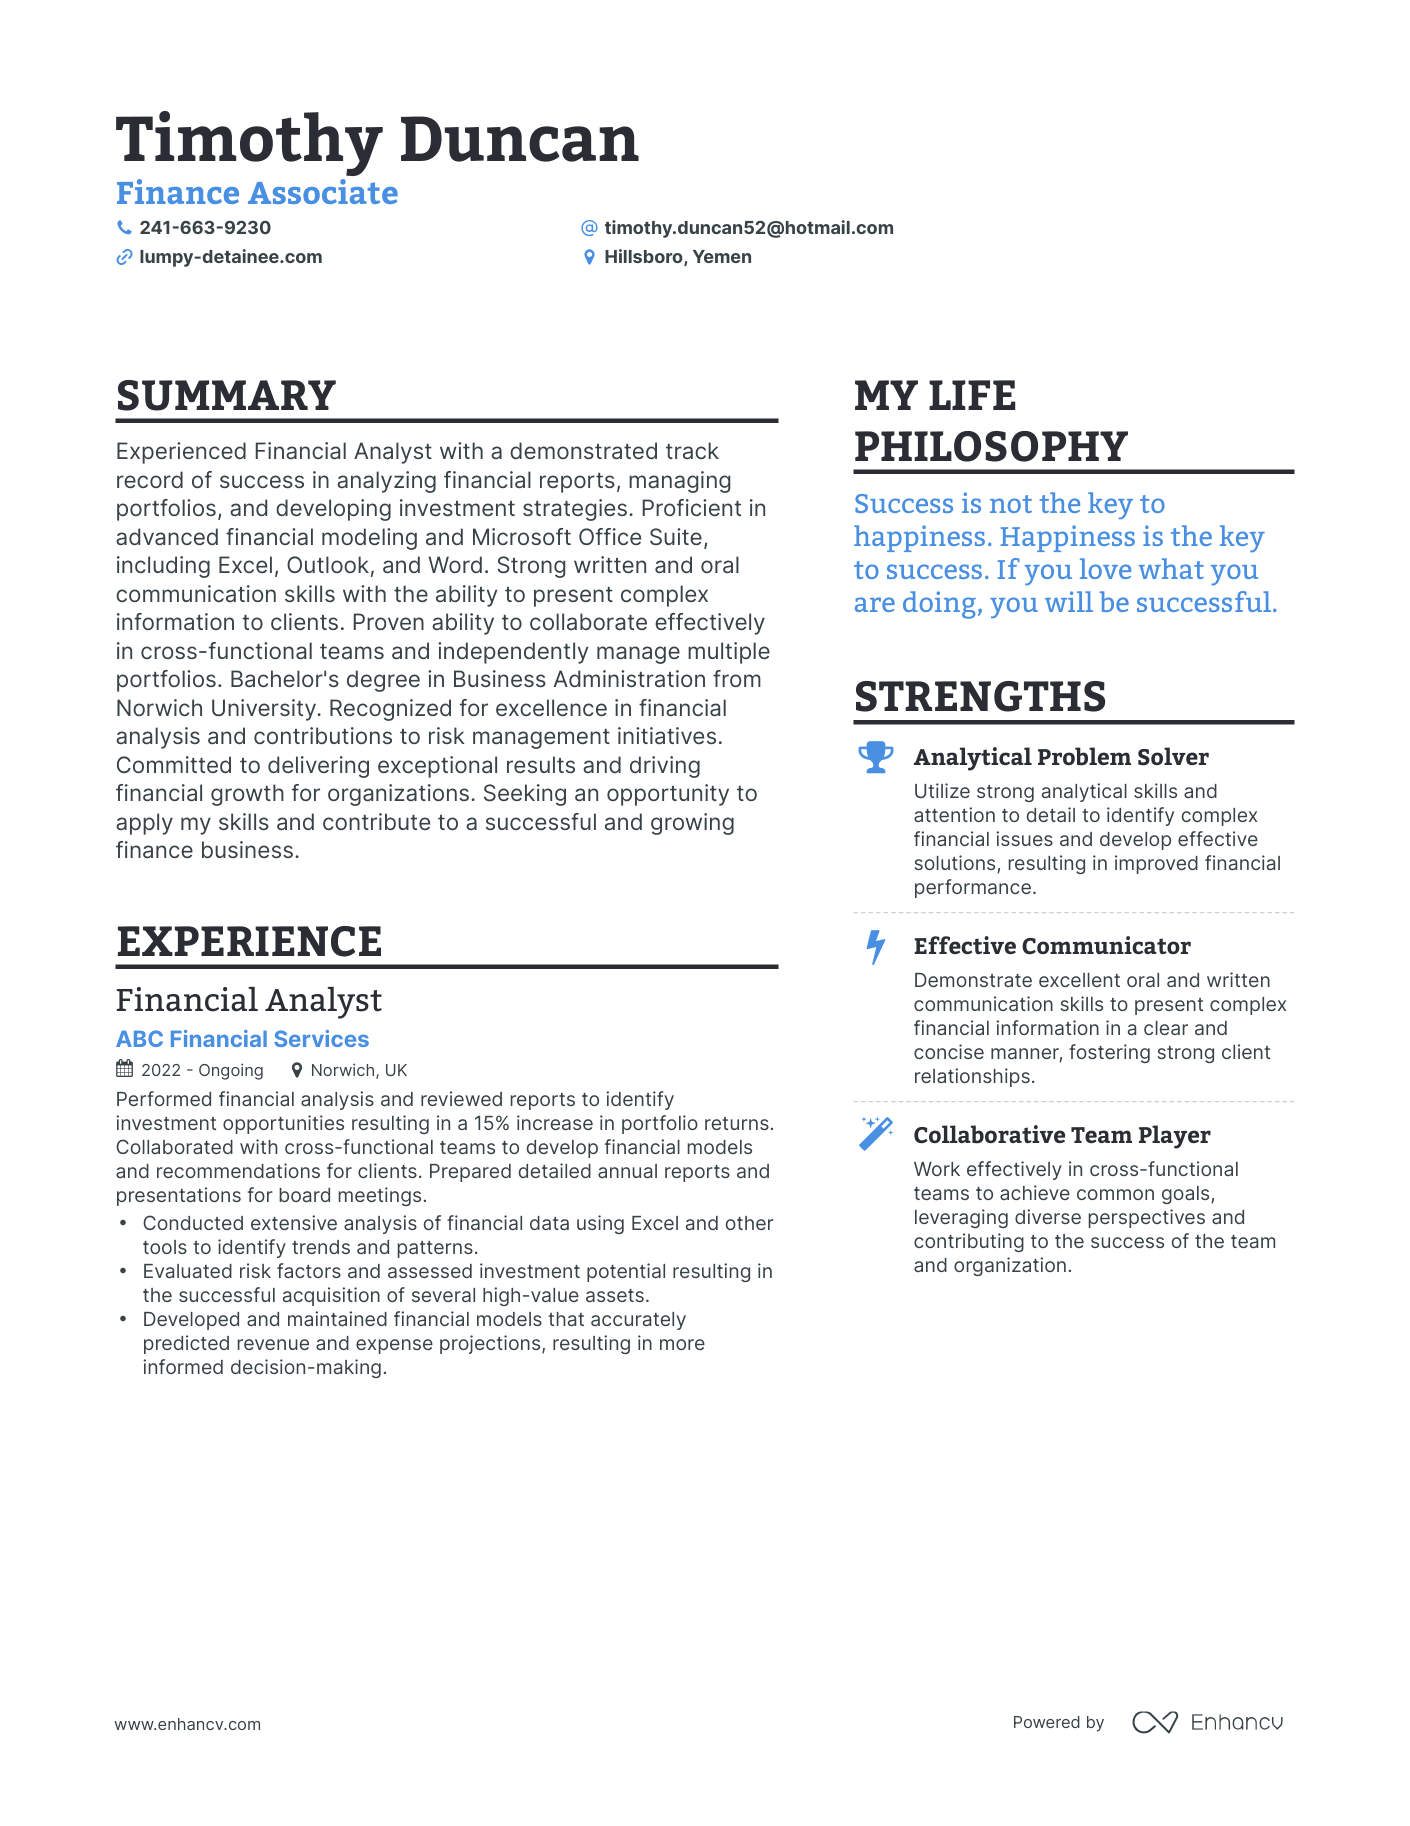 Finance Associate resume example